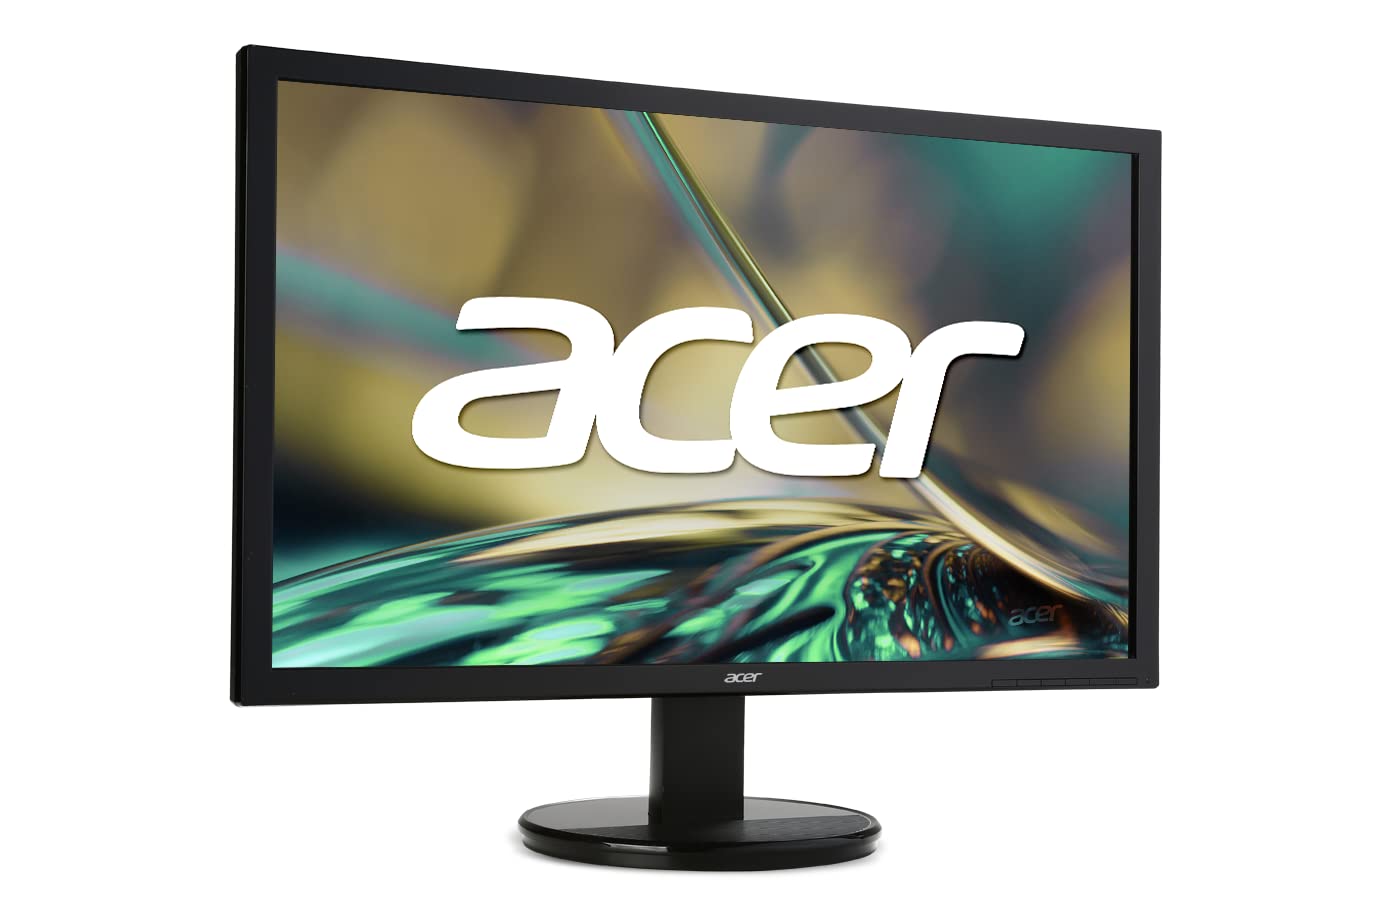 Acer K202HQL bi 19.5” HD+ (1600 x 900) TN Monitor | 60Hz Refresh Rate | 5ms Response Time | NTSC 72% Color Gamut I Tilt VESA Compatible For Work or Home | HDMI Port 1.4 & VGA Port,Black